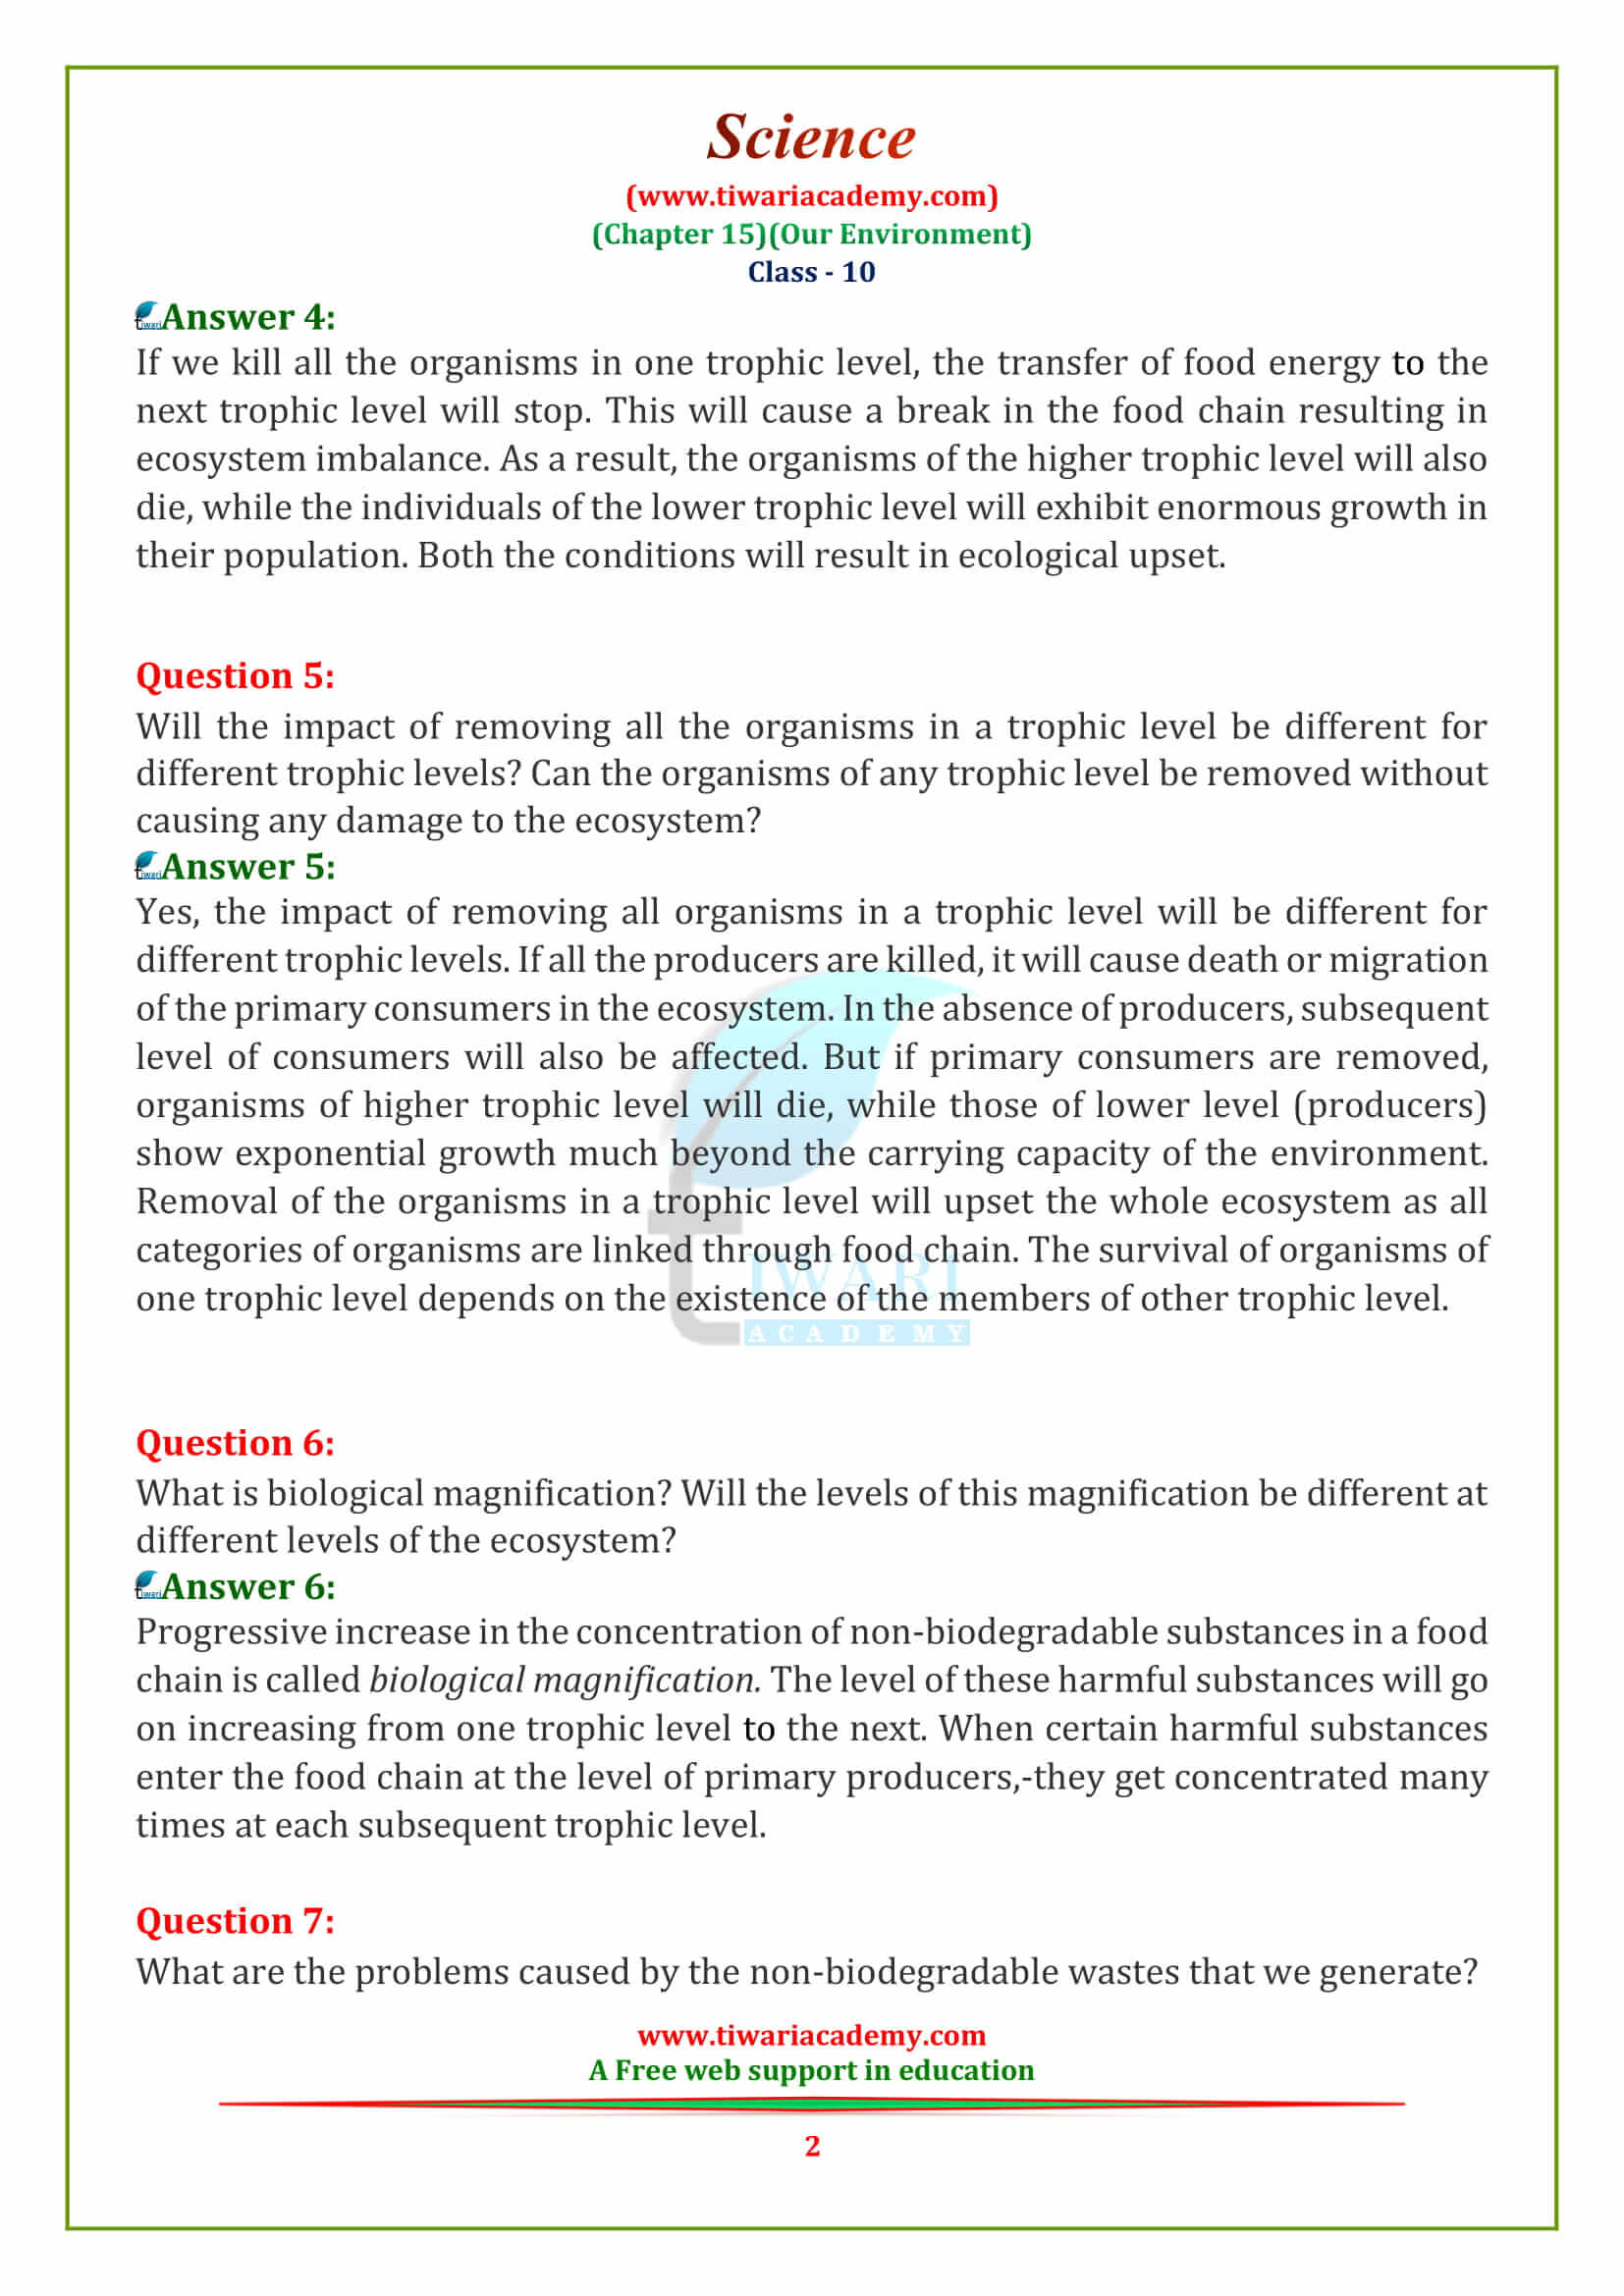 class 10 science ch. 15 in pdf